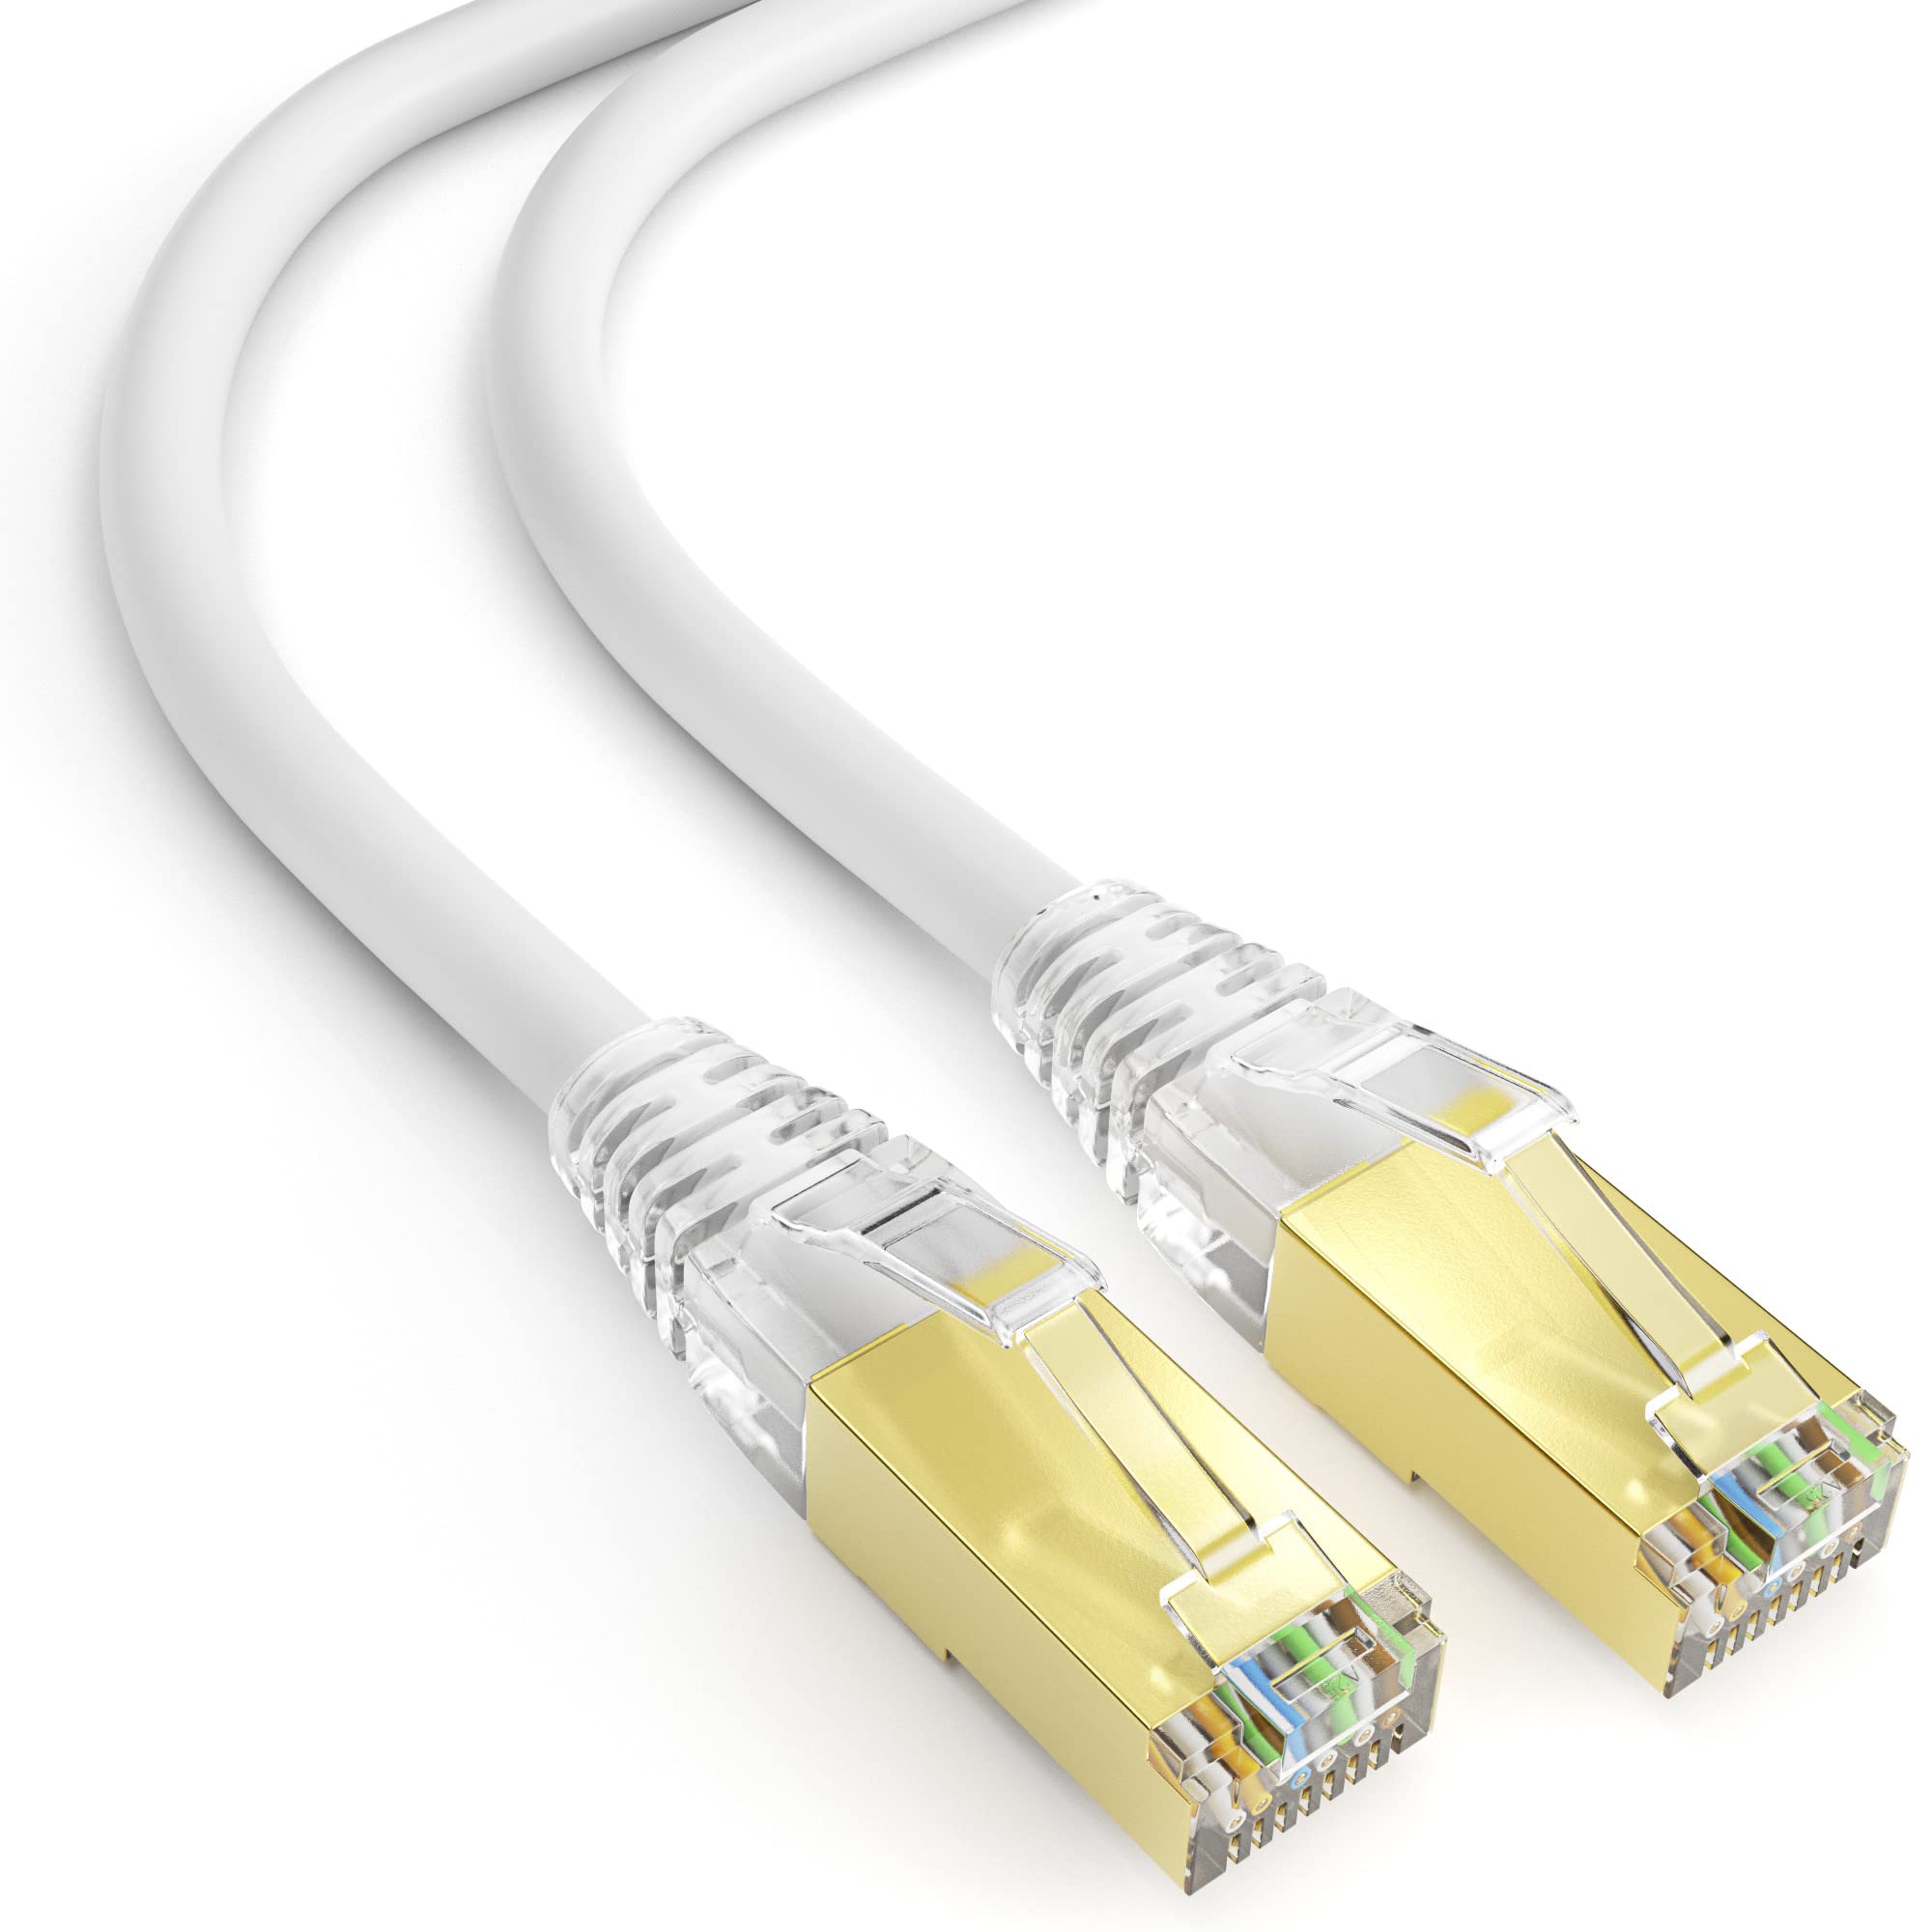 mumbi LAN Kabel 10m CAT 8 Netzwerkkabel geschirmtes F/FTP CAT8 Ethernet Kabel Patchkabel RJ45 10Meter, Weiss